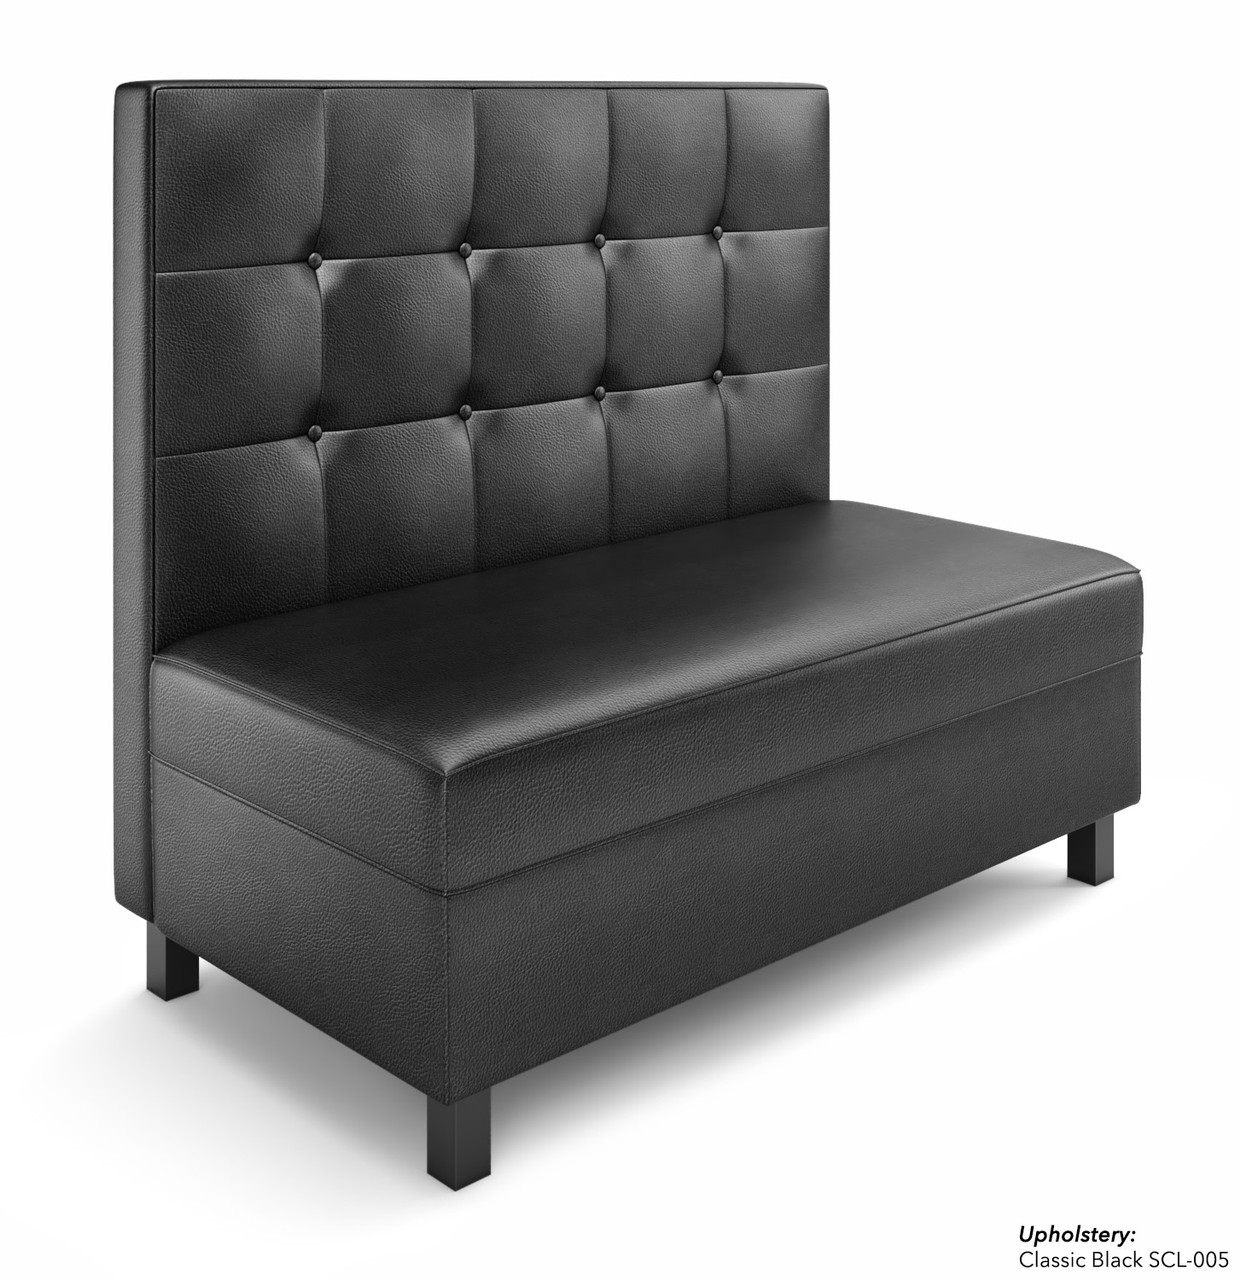 Upholstery Supplies - ACB2308 Auto Carpet Binding, #308 Black, 3/4